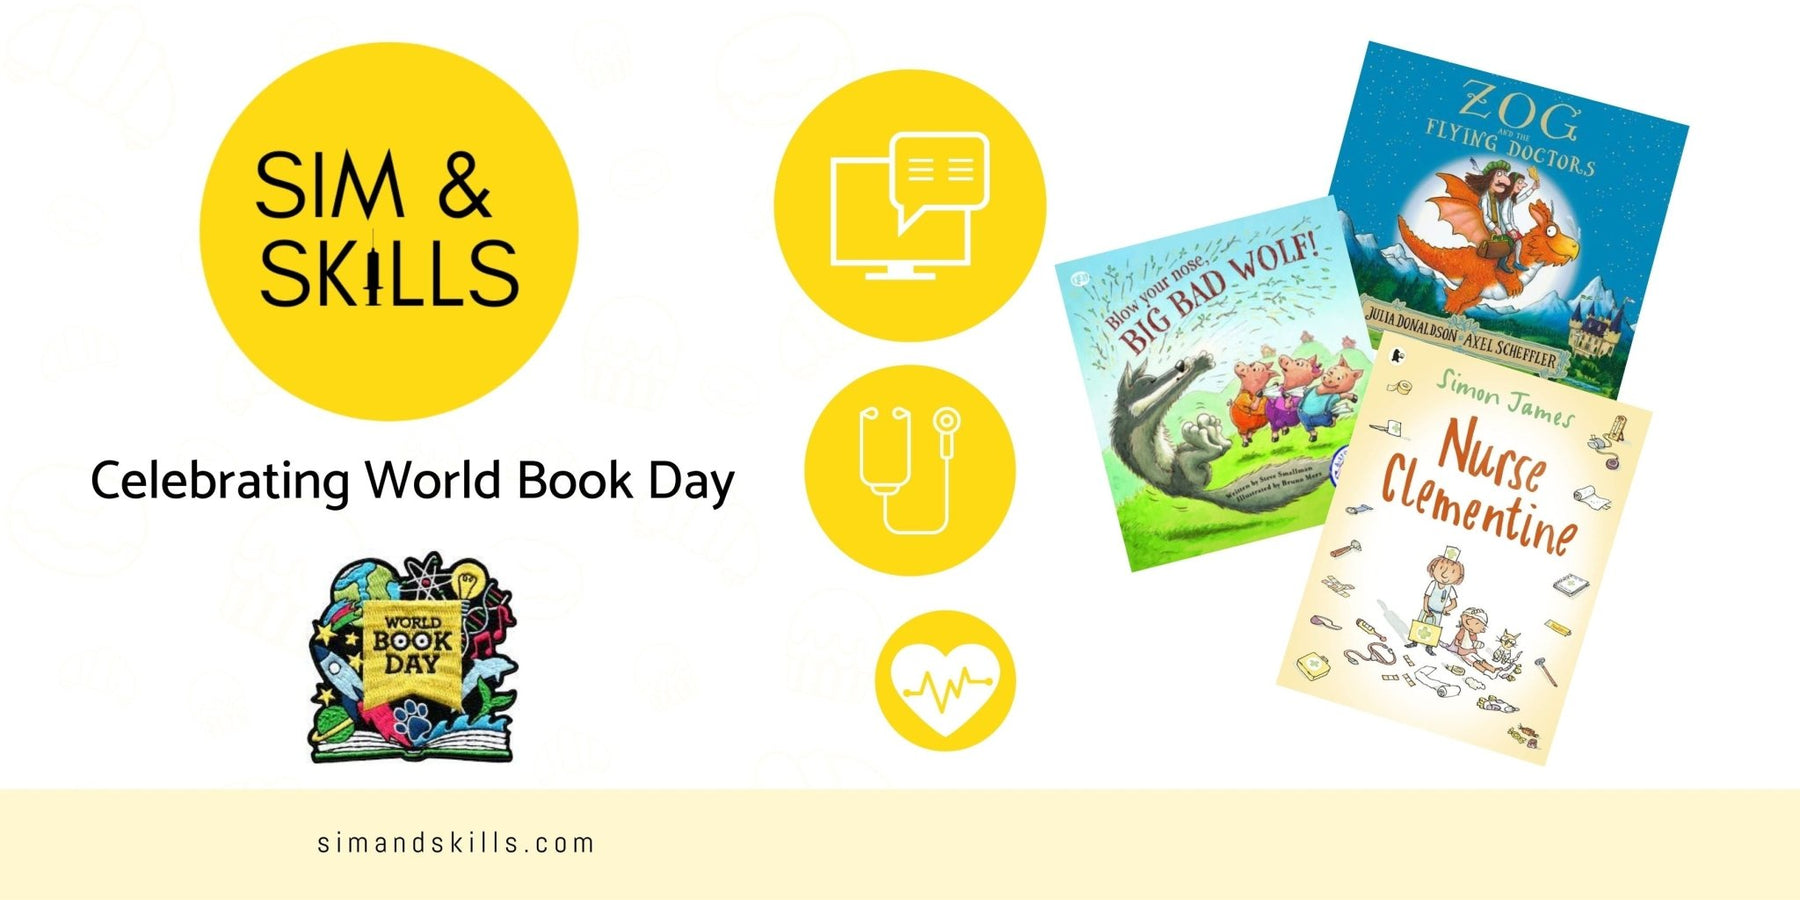 Sim & Skills is Celebrating World Book Day - Sim & Skills